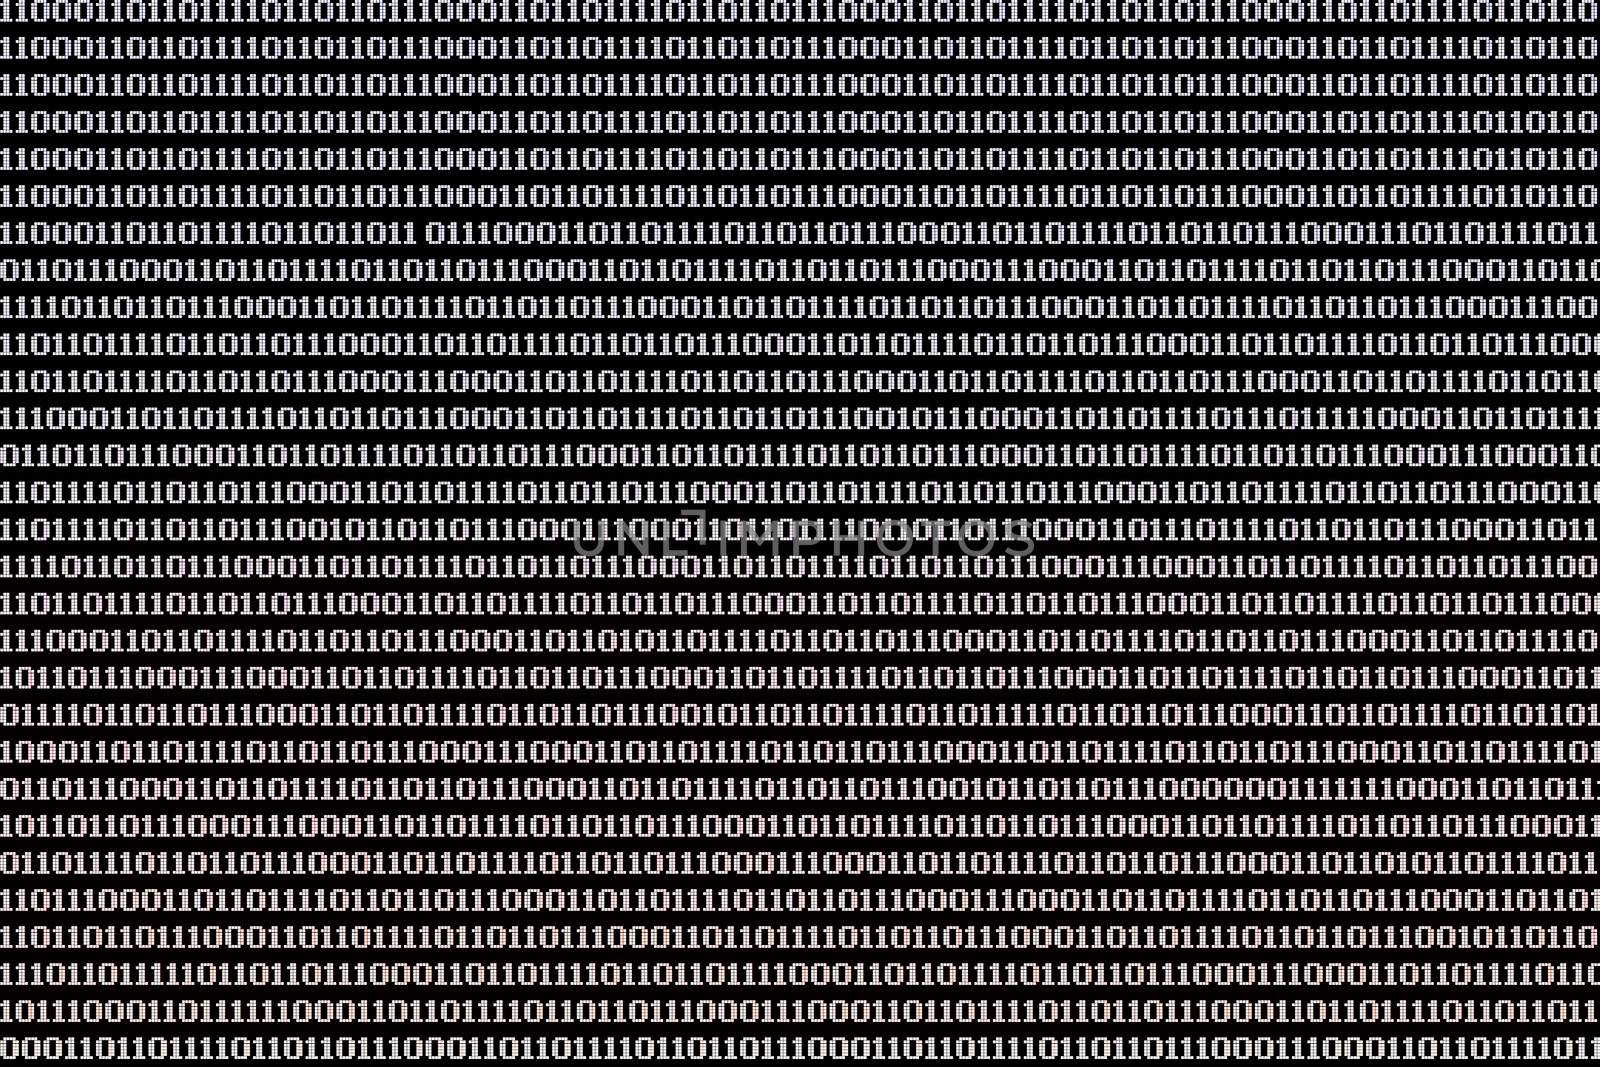 Binary computer code background